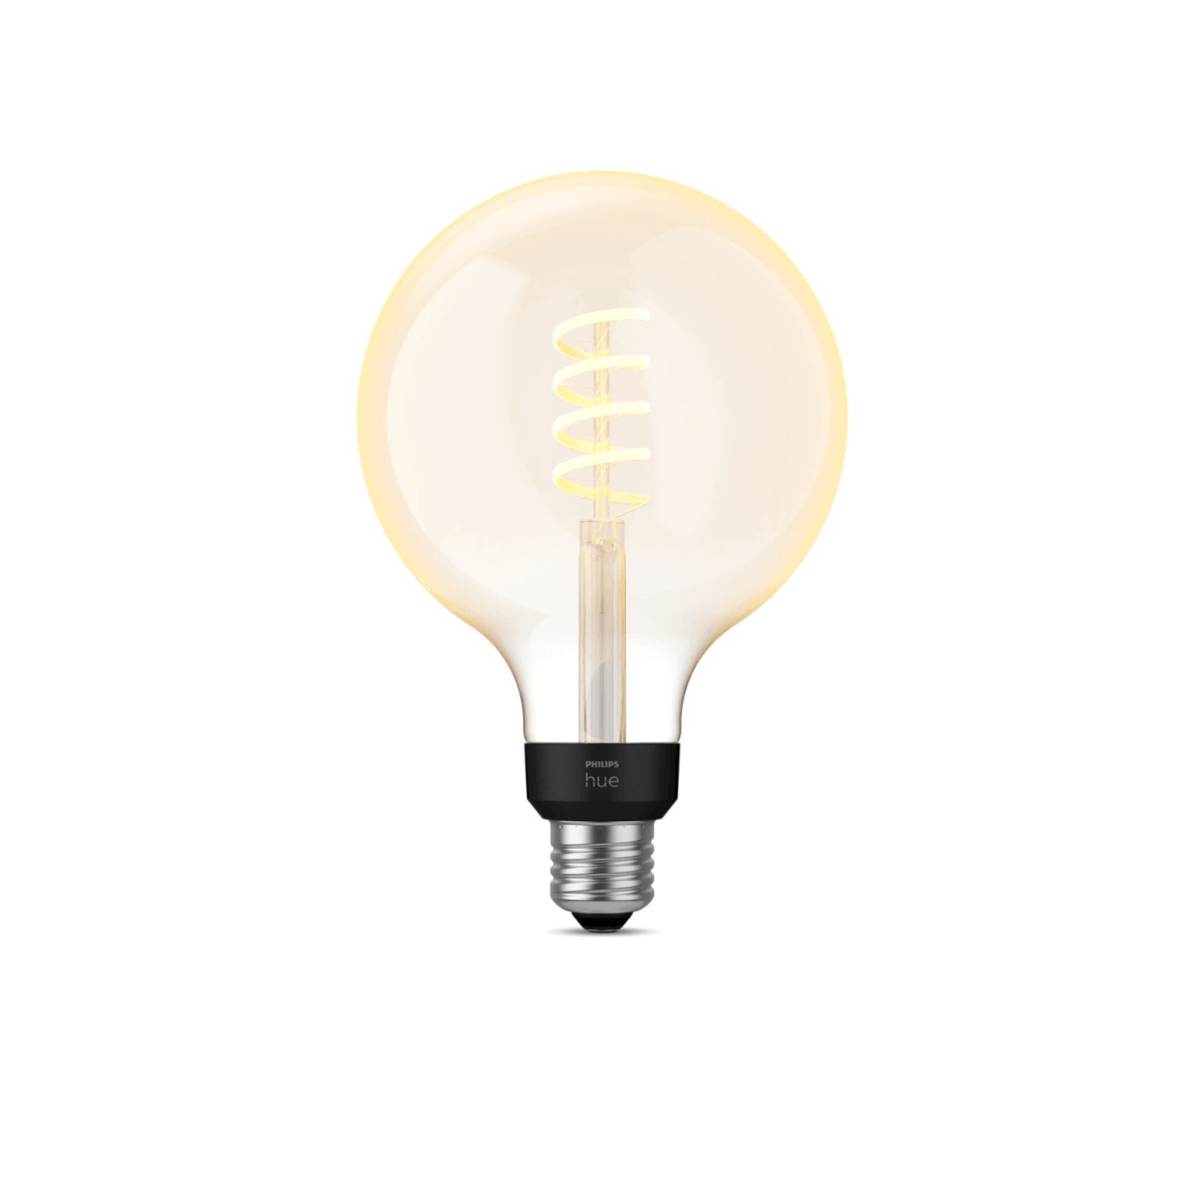 Philips Hue per White Giant | via your-smarthome E27 | Home G125 Ambiance App Onlineshop Globe | | Dein Smart | Leuchtmittel E27 LED oder Sprache dimmbar Lampe Filament Licht